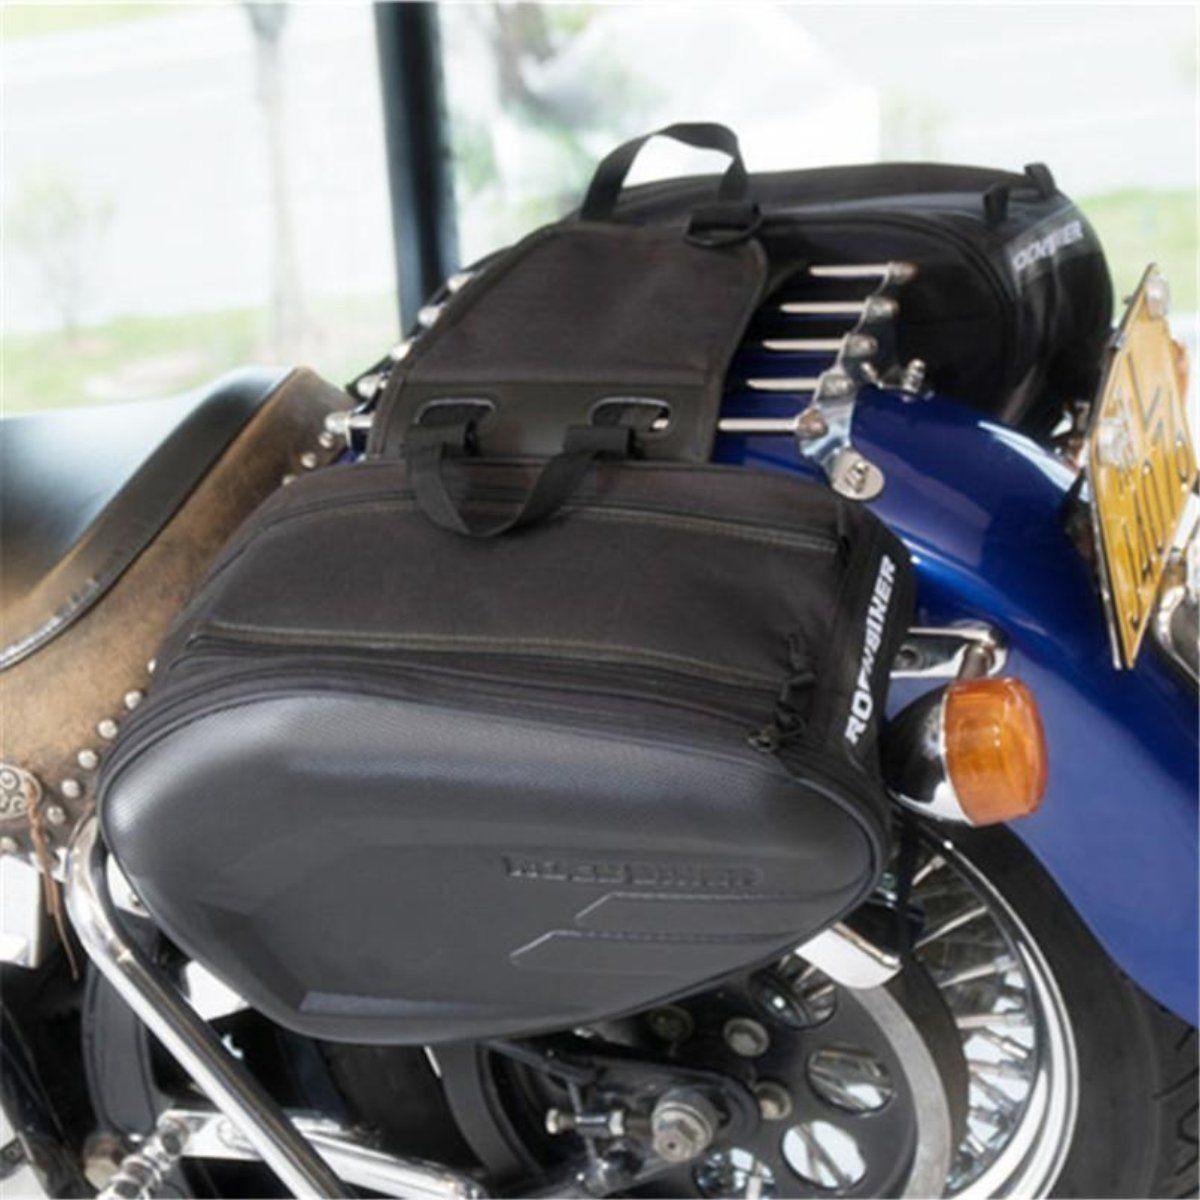 Motorcycle Saddle Bag, Waterproof, Black Oxford Cloth - American Legend Rider